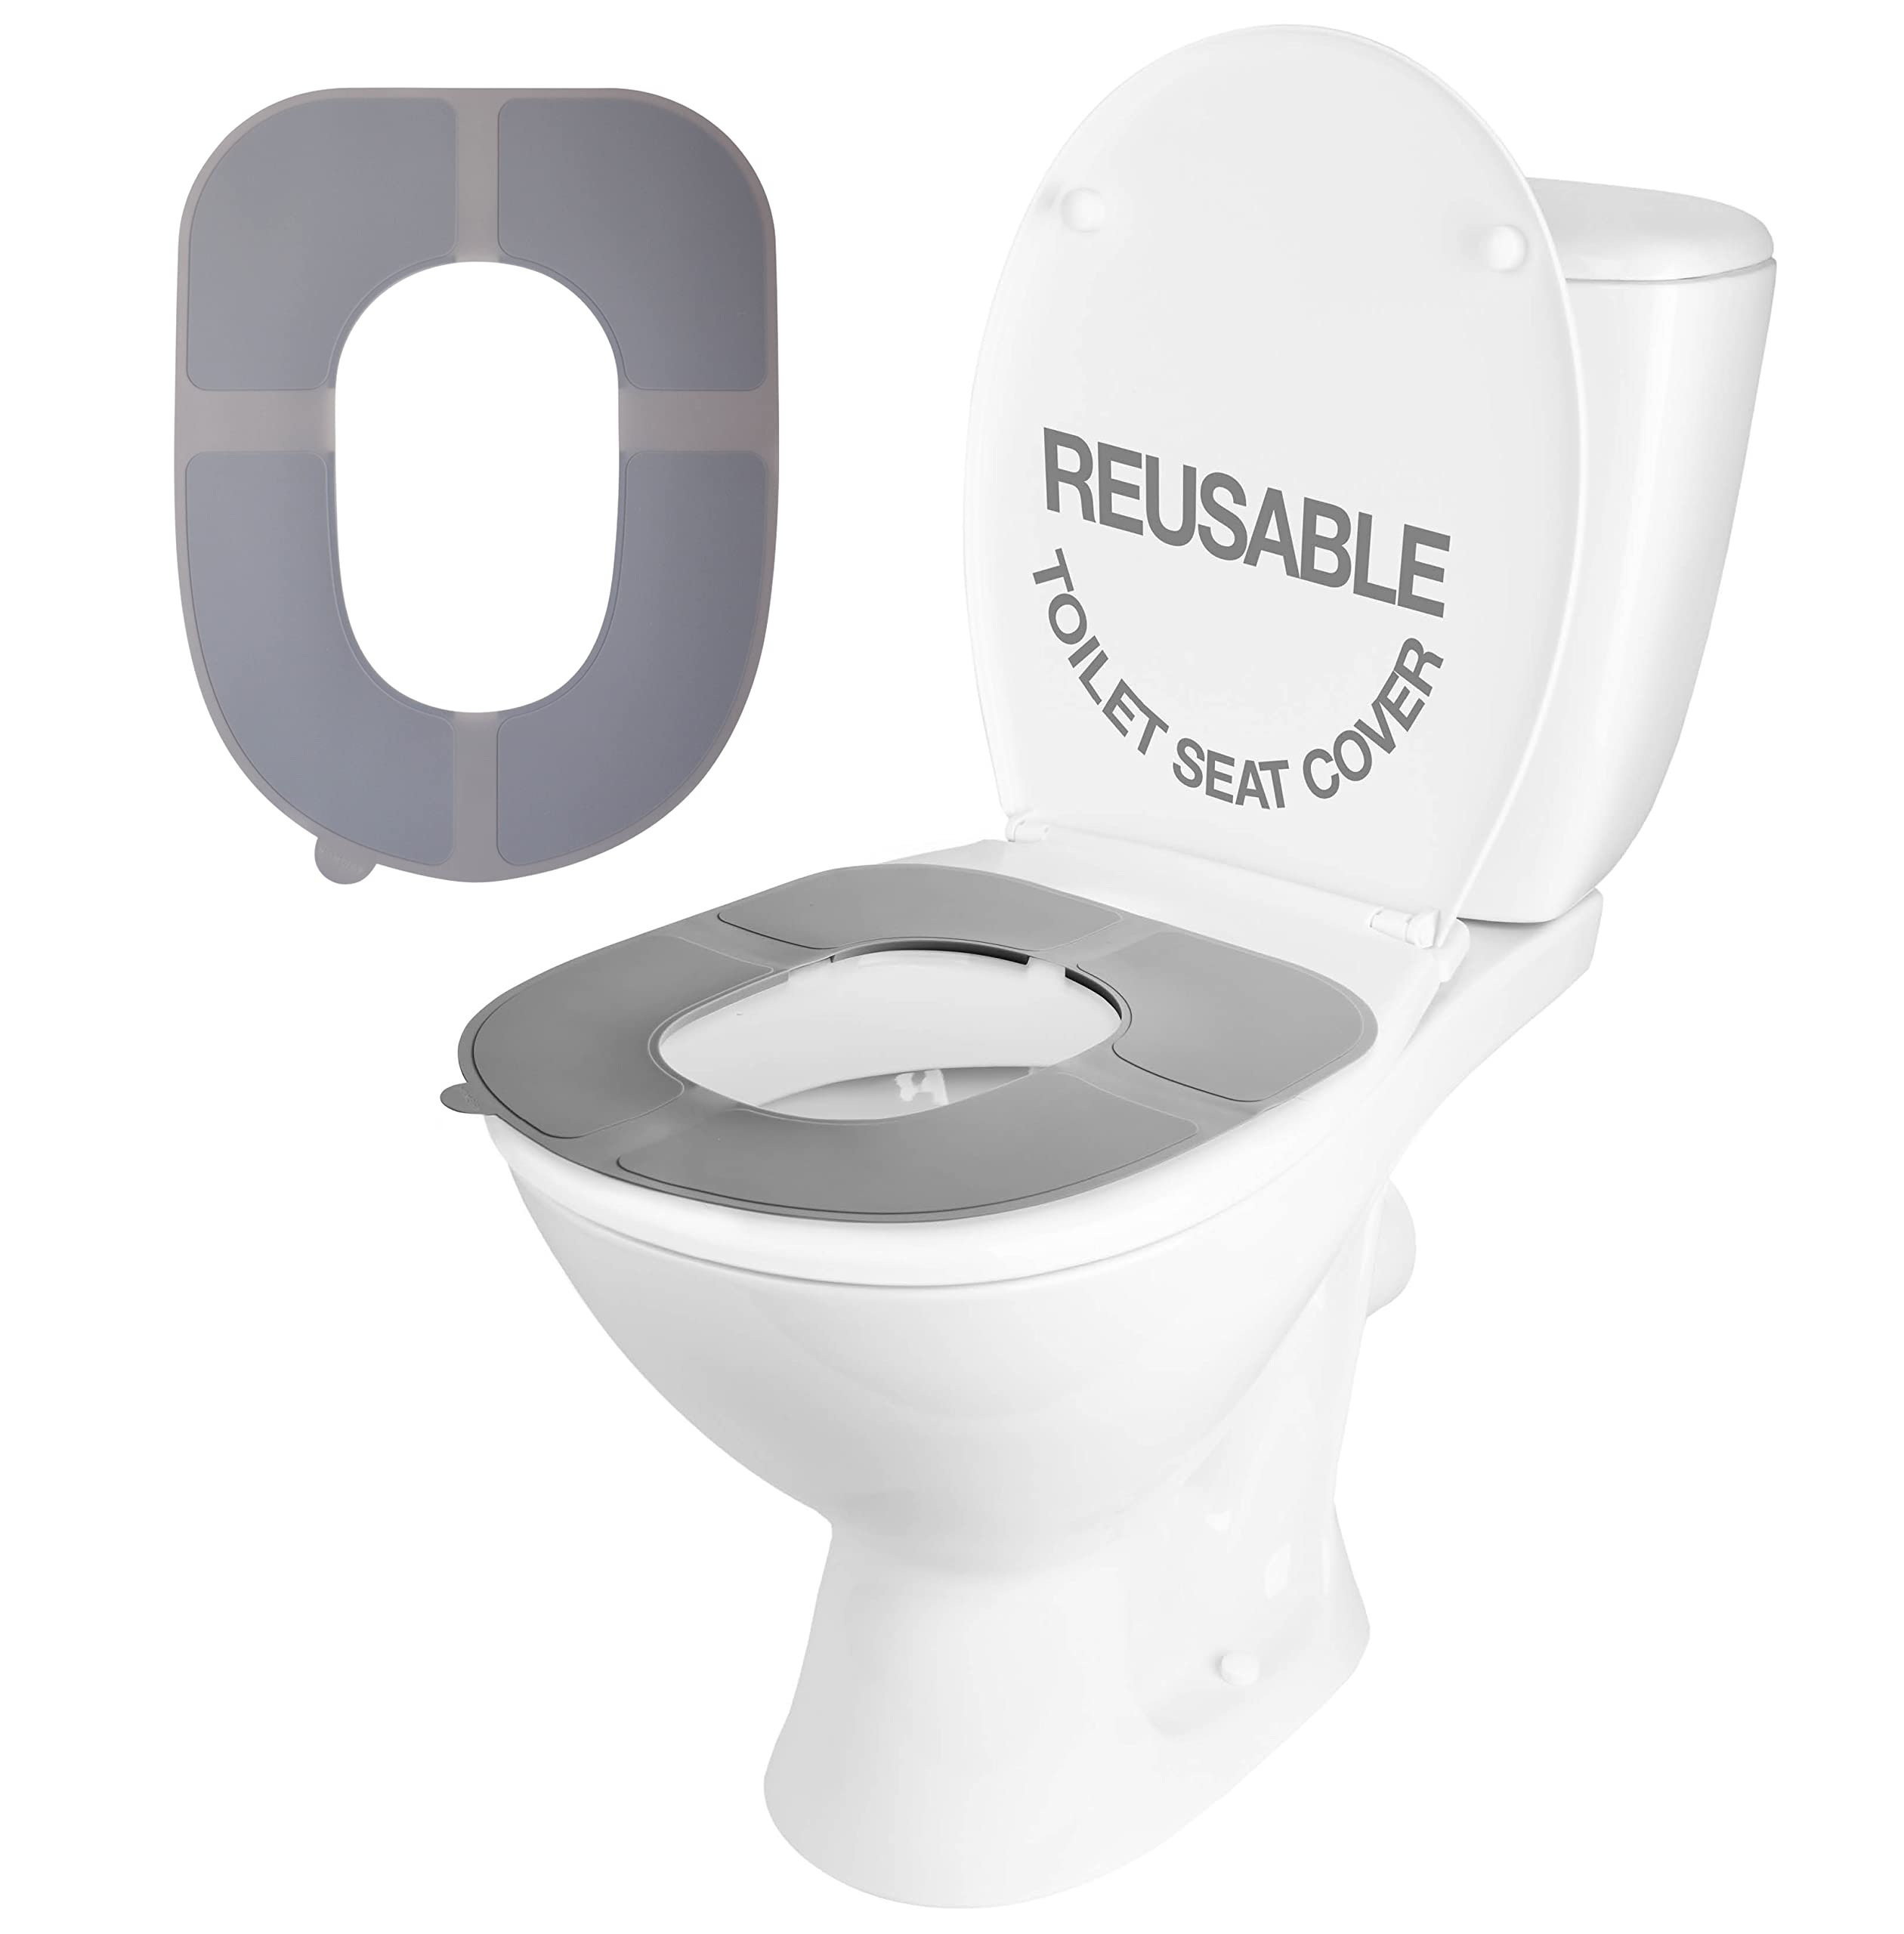 Reusable Silicone Toilet Seat Cover, Waterproof, Non-Slip, Toilet